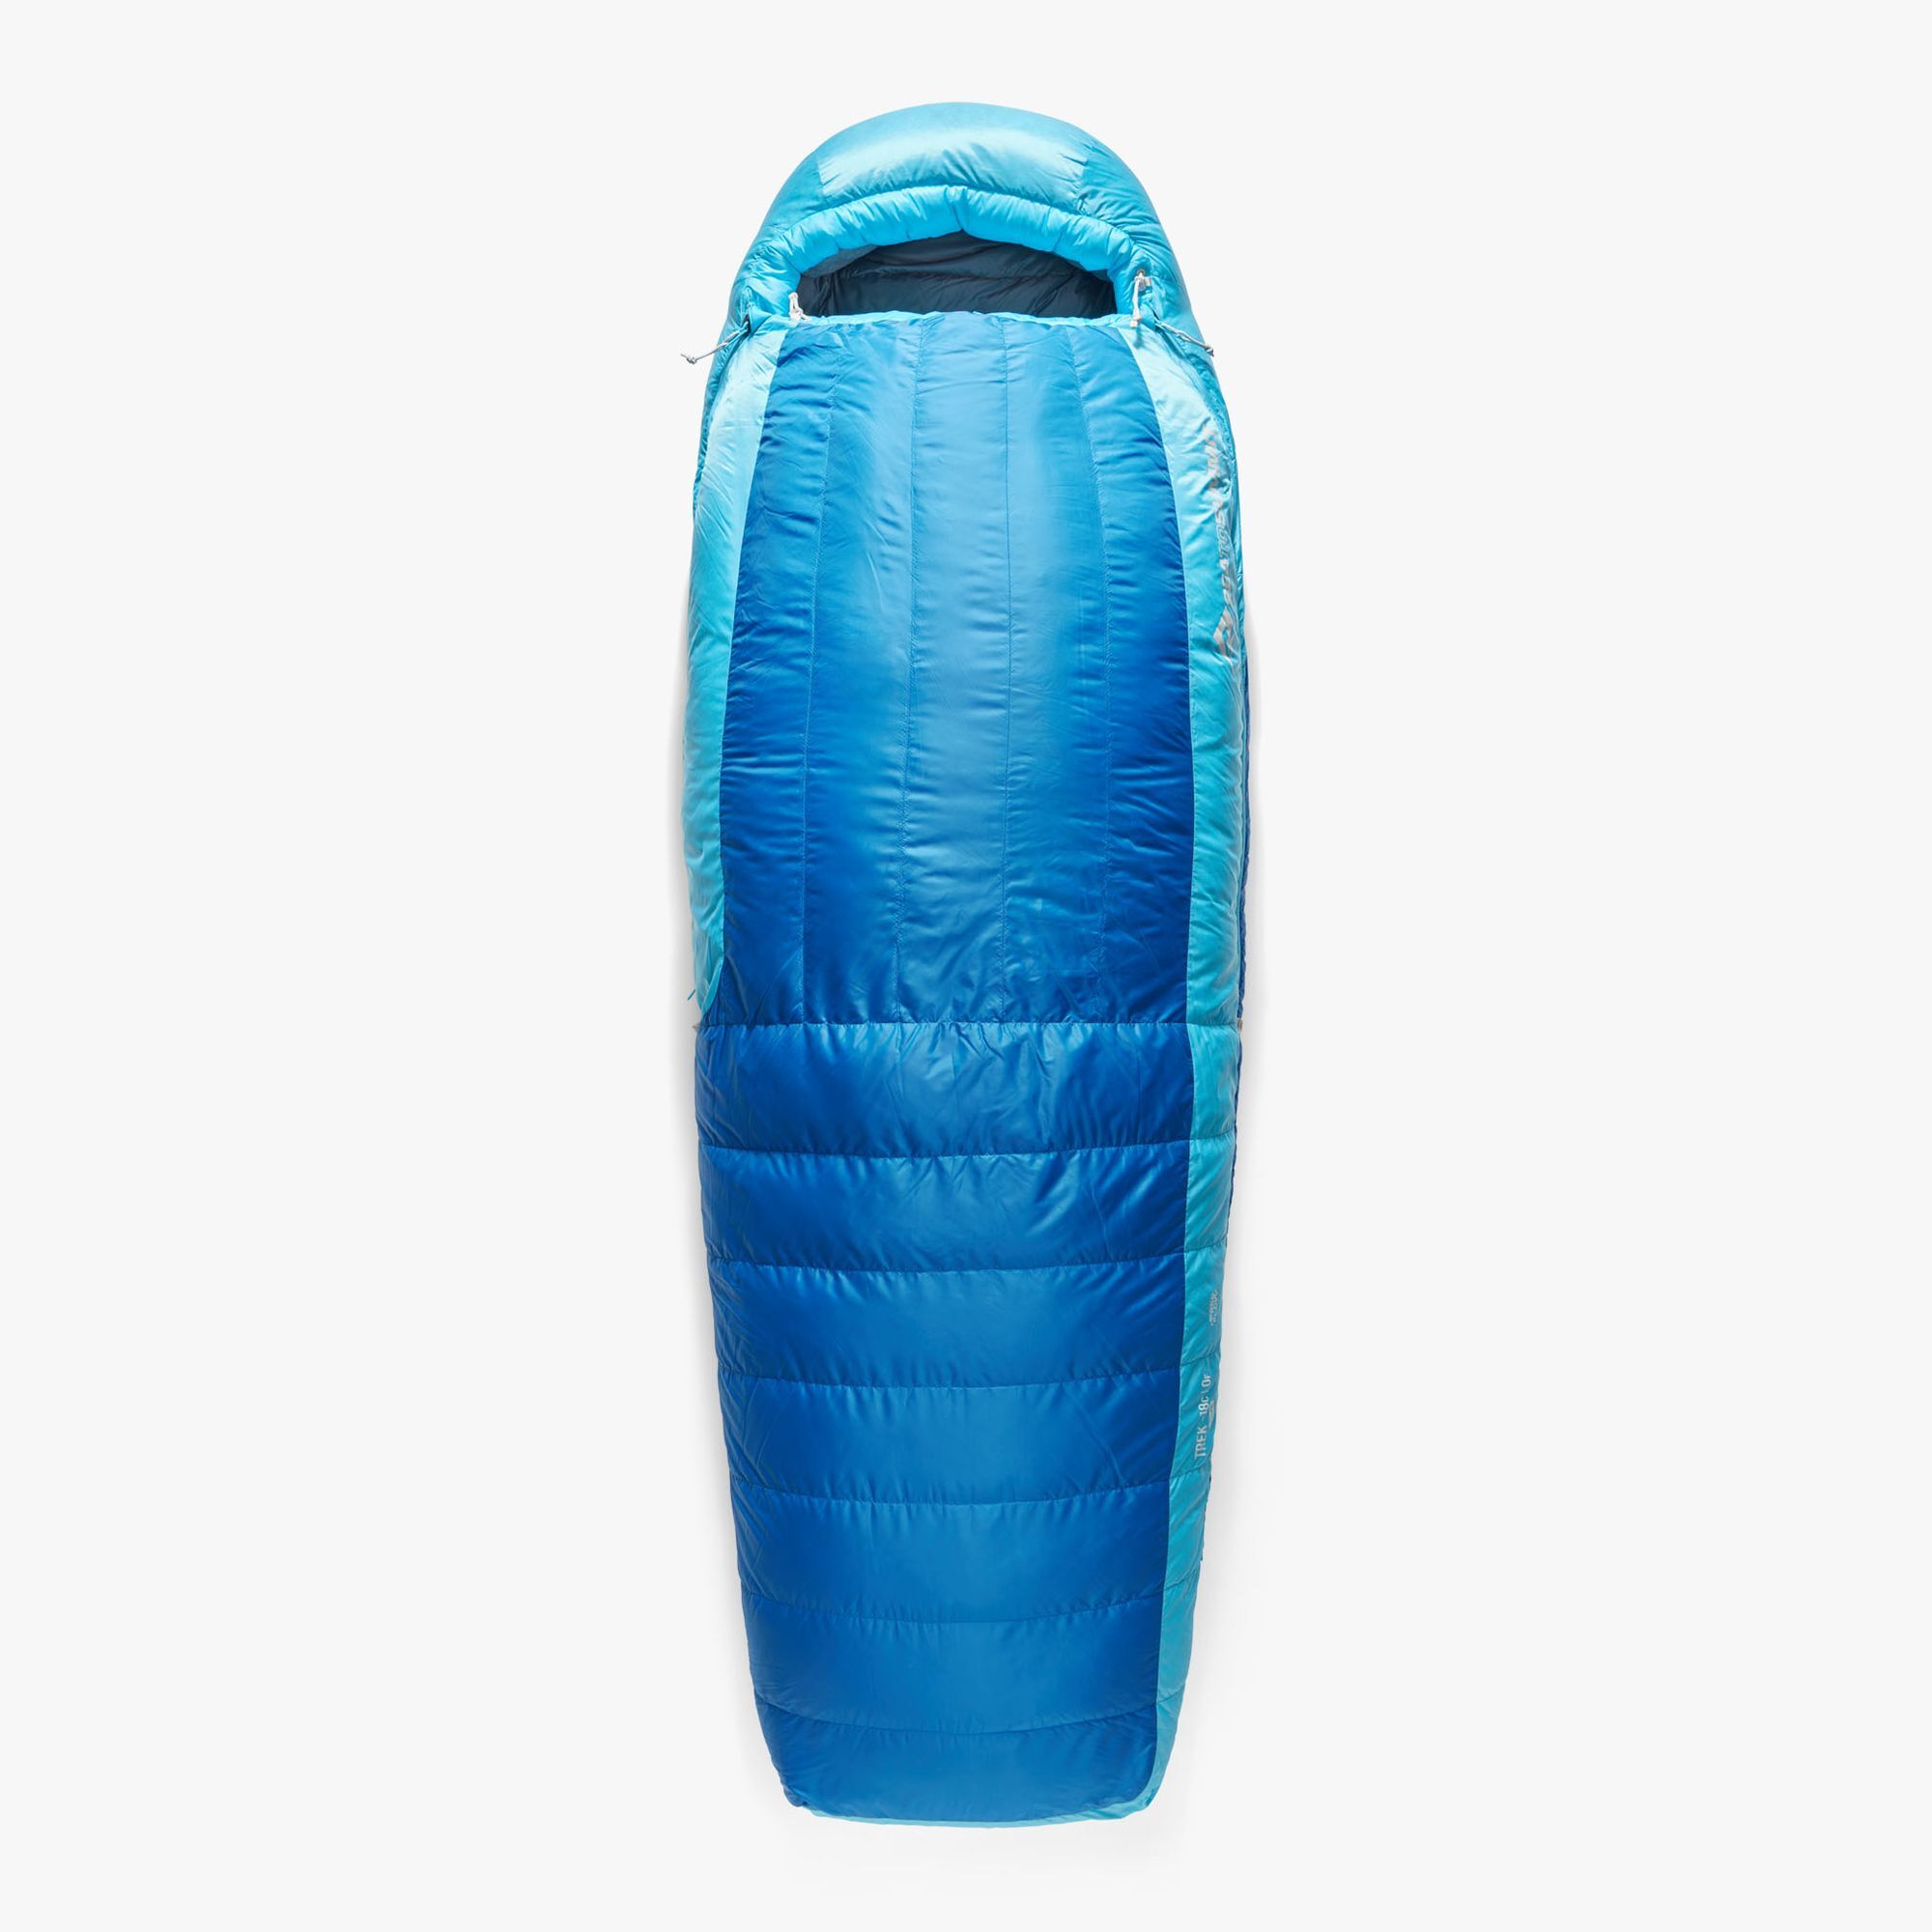 Sea To Summit Trek -18C / 0F - Sleeping bag | Hardloop